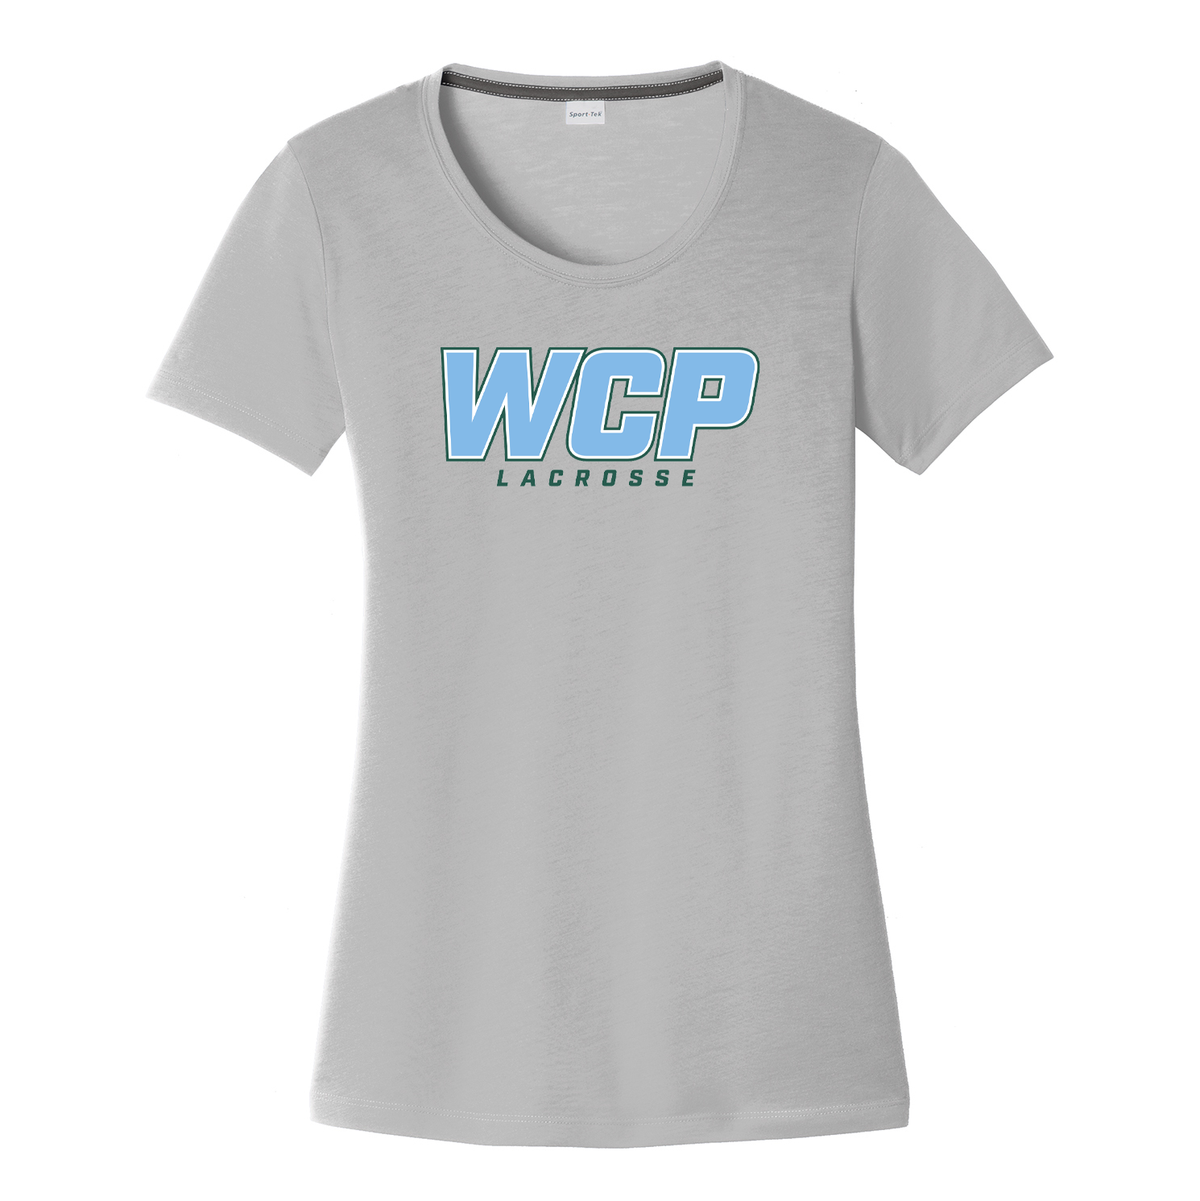 WCP Girls Lacrosse Women's CottonTouch Performance T-Shirt